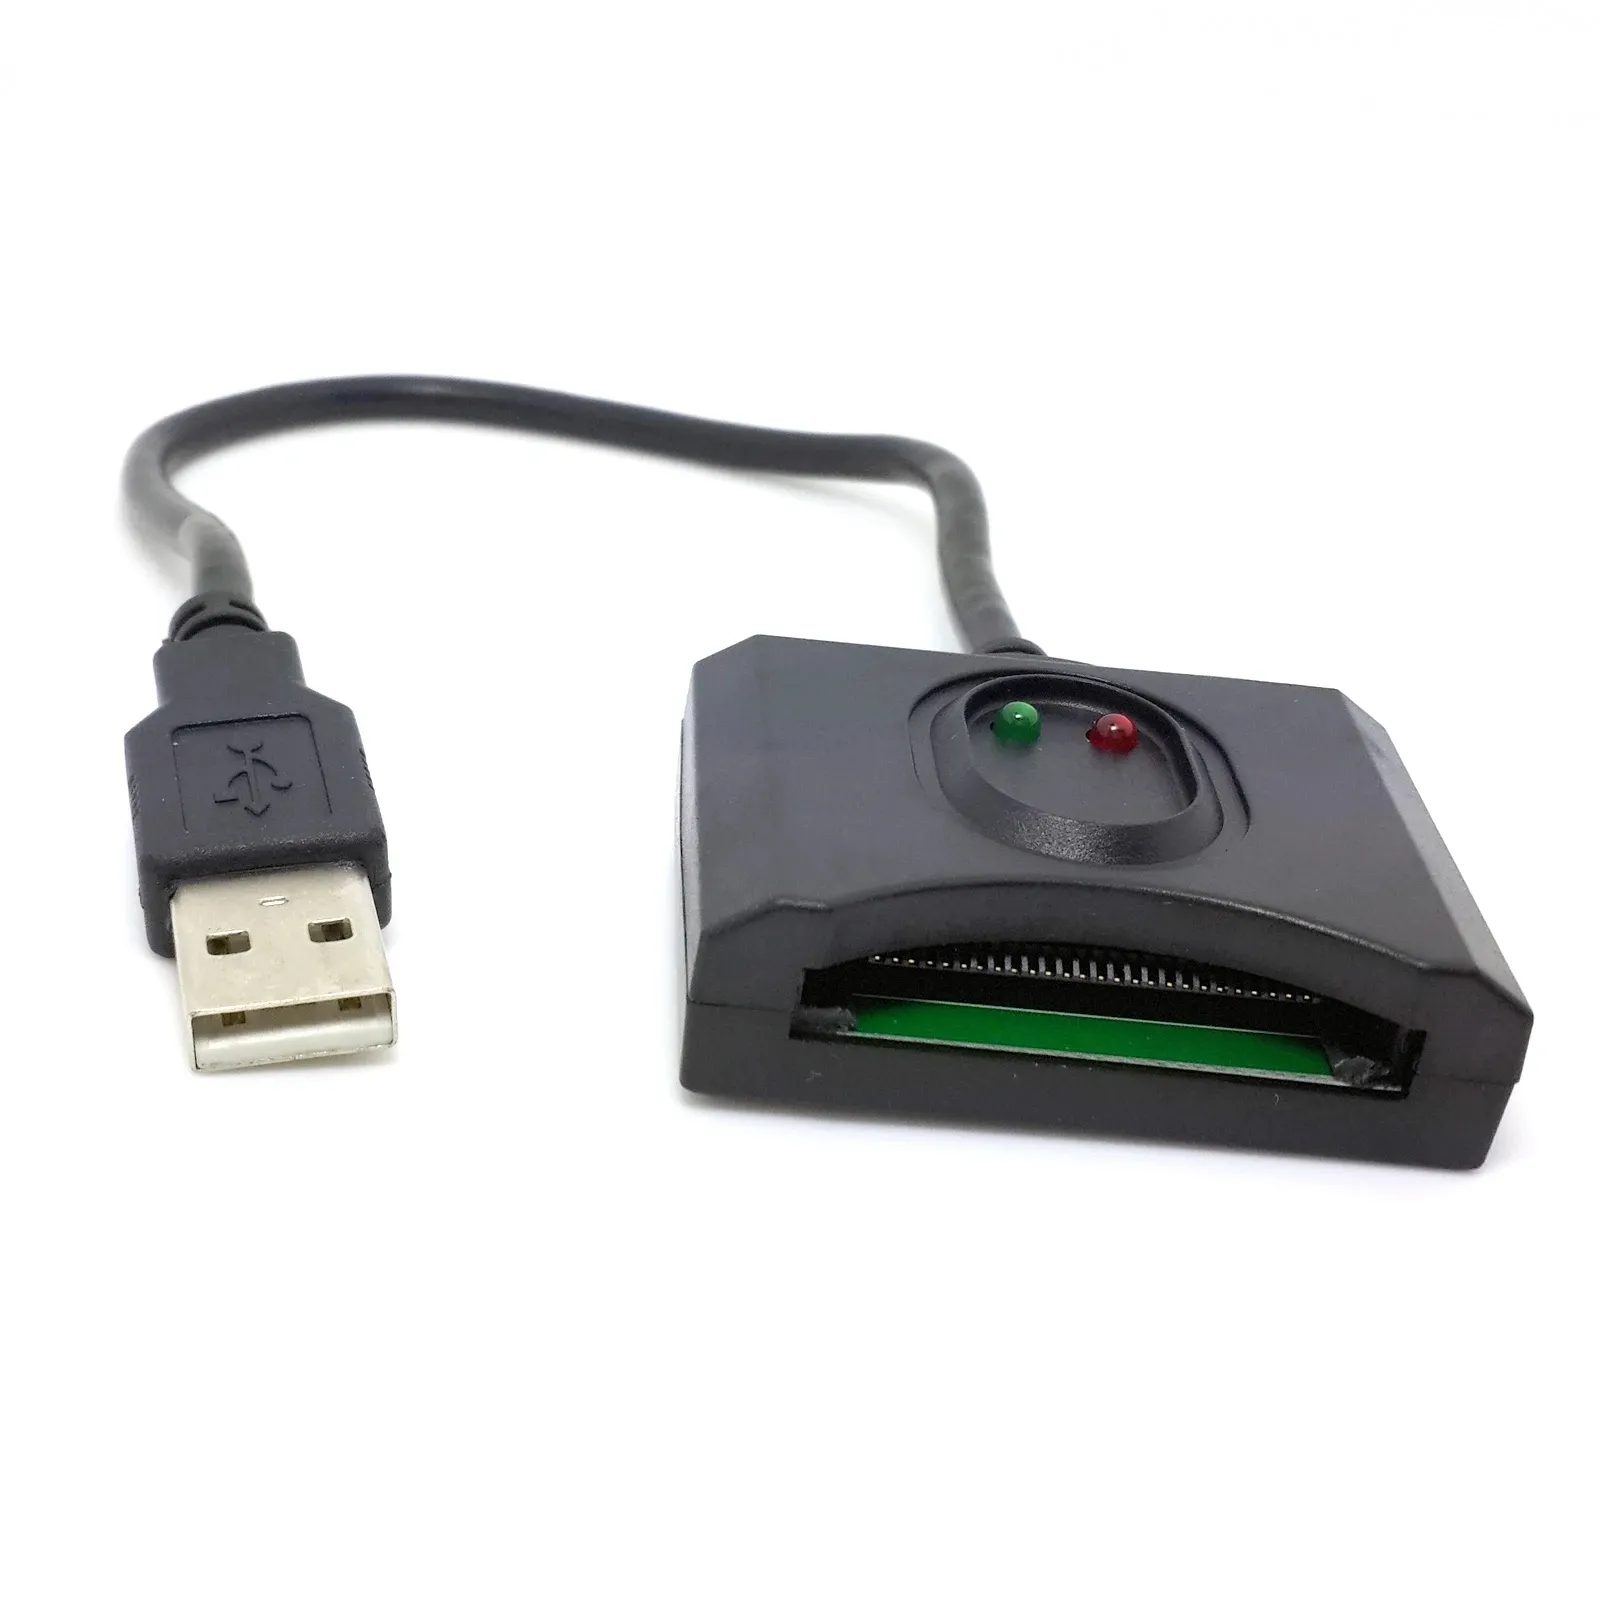 LED 및 DC 전원 잭이있는 노트북 컴퓨터 PC에 대한 Express카드 어댑터에 익스프레스 카드 34MM USB 2.0